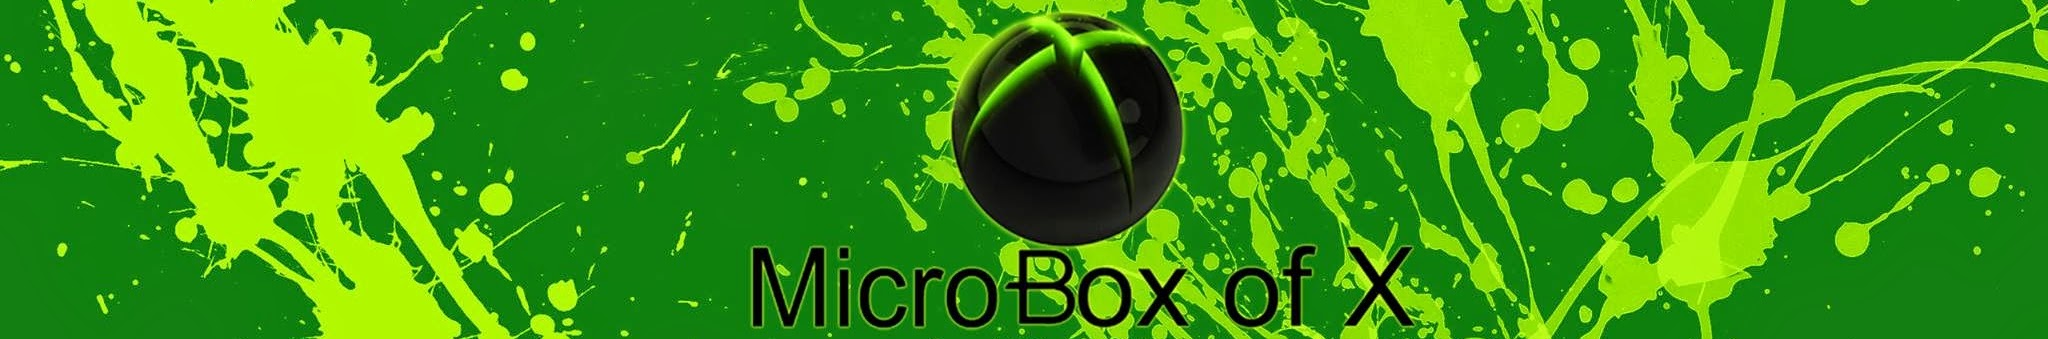 Microbox